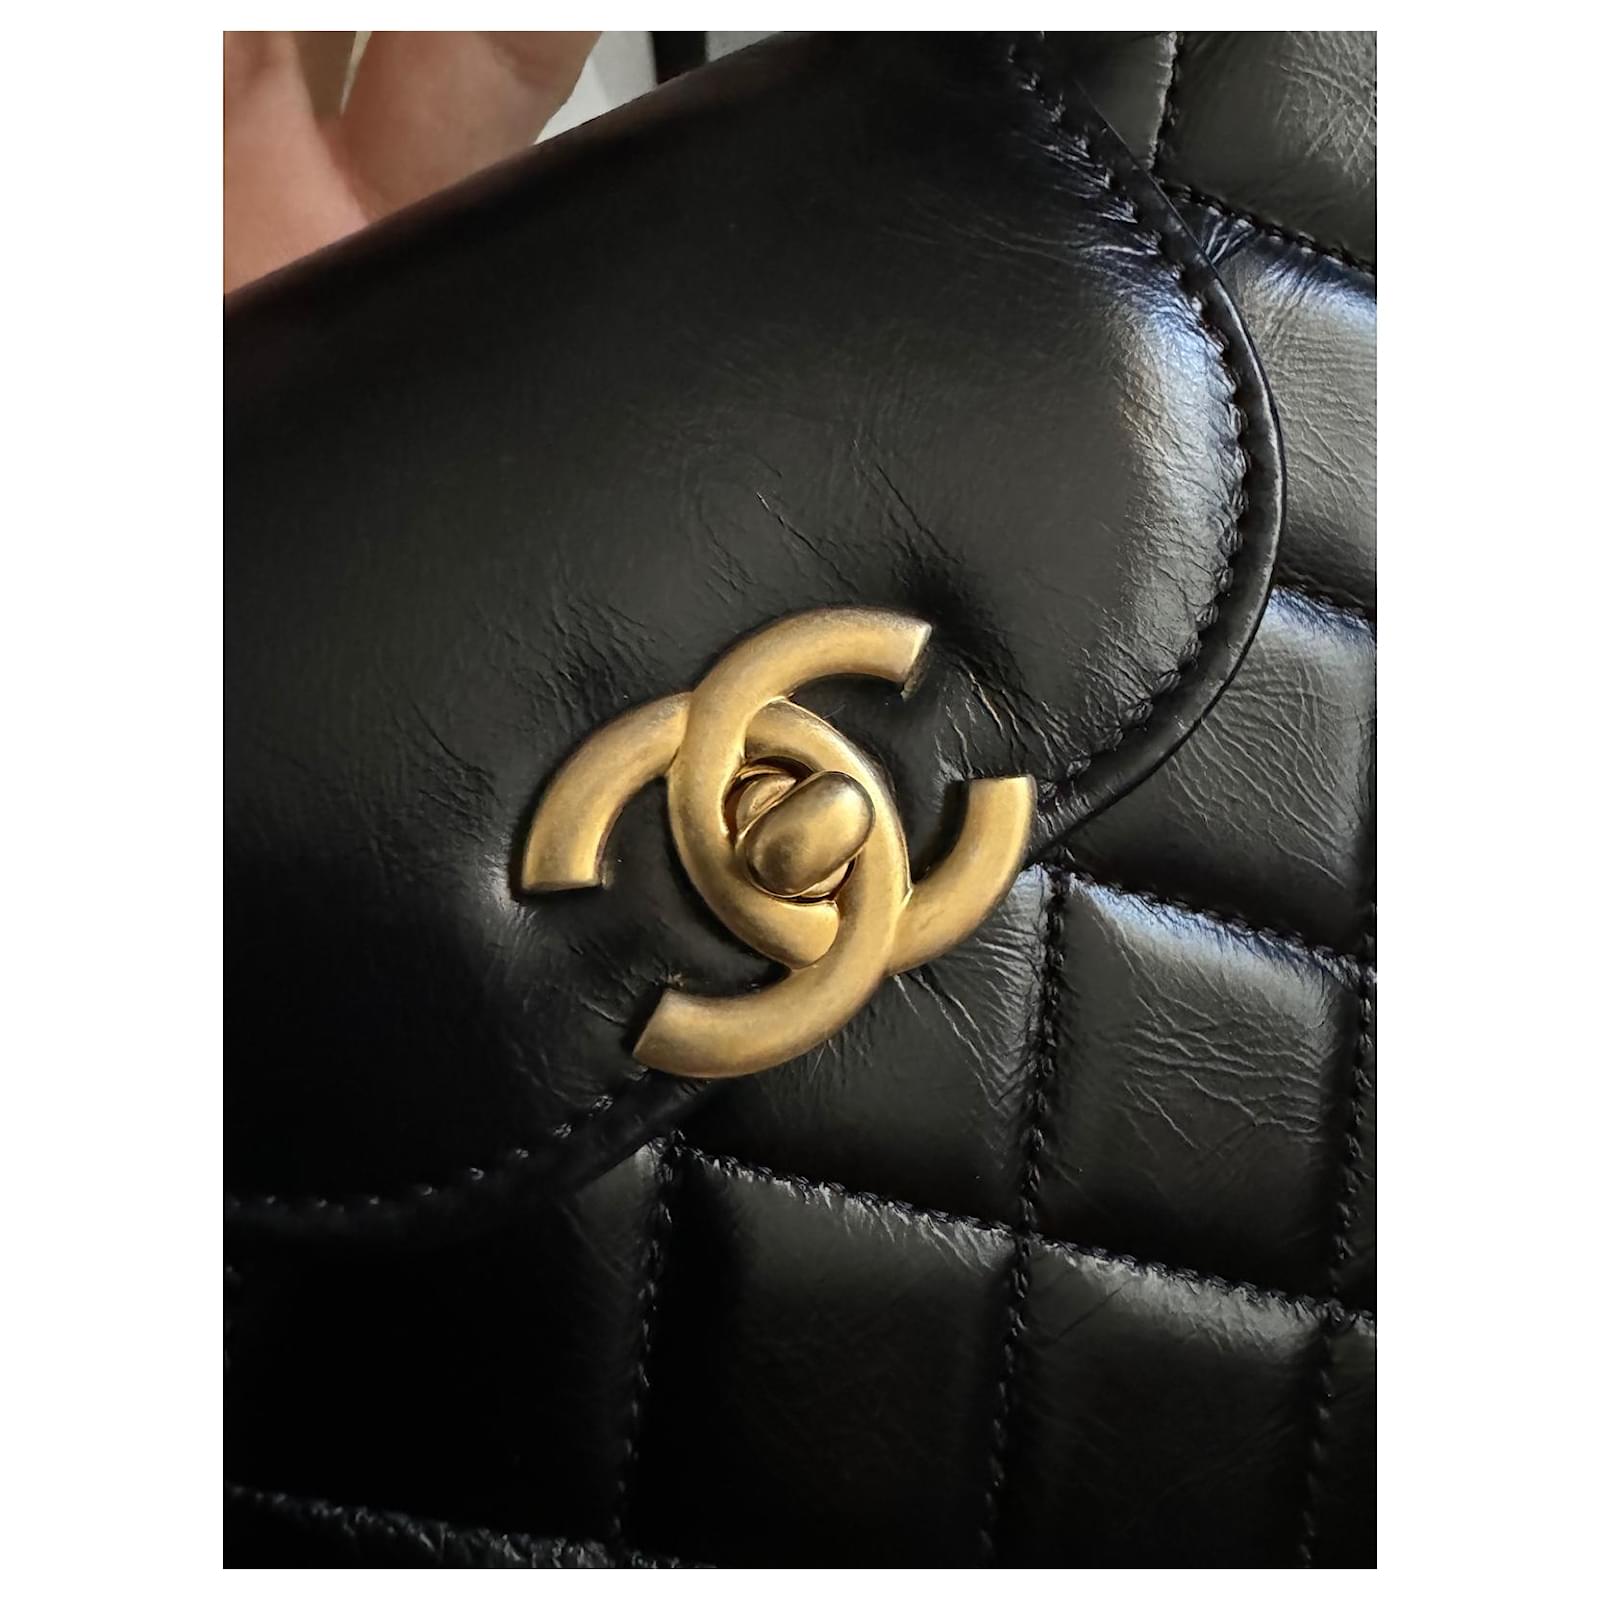 Handbags Chanel Chanel ‘Kelly’ Shopping Bag